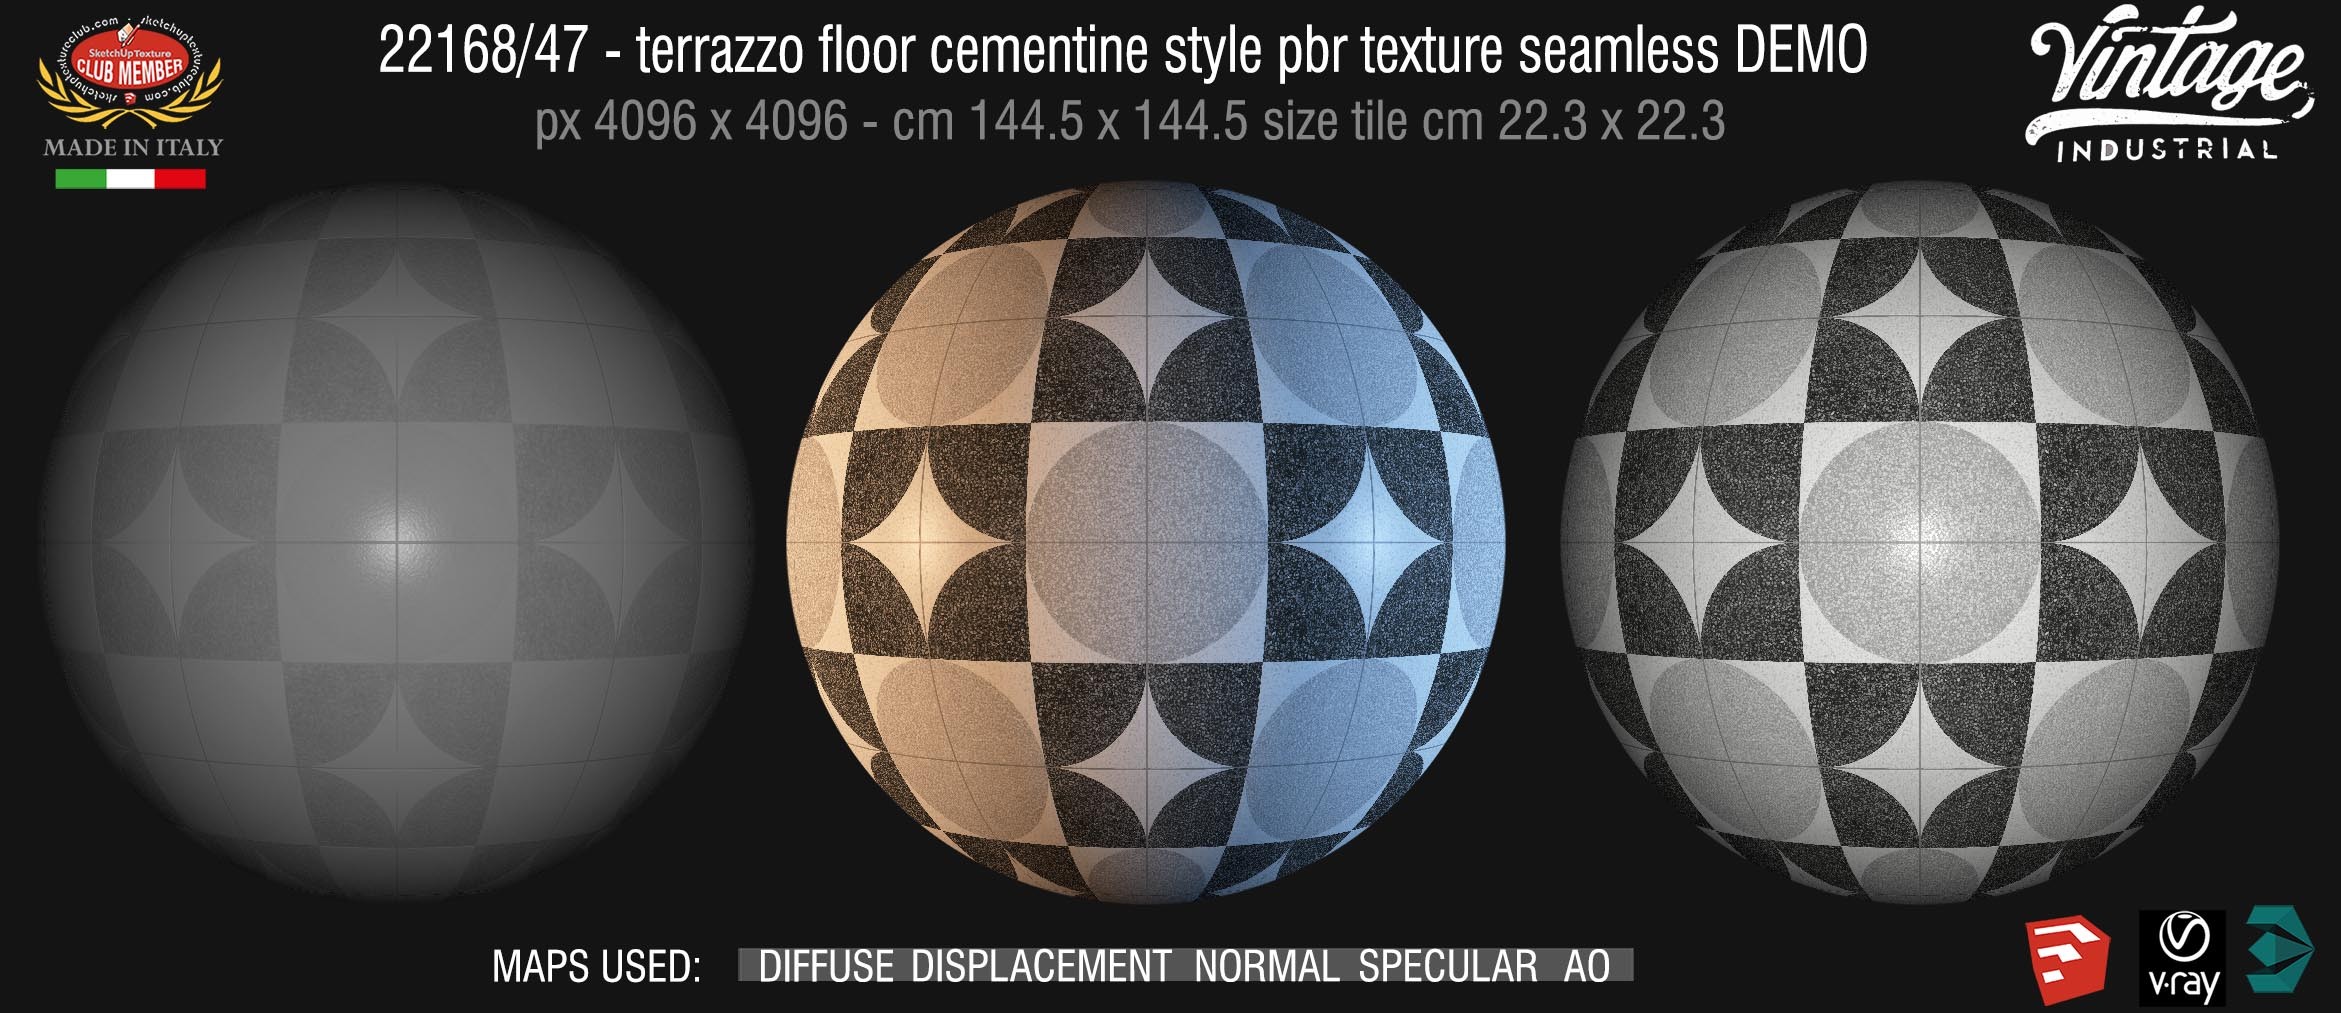 22168/47 terrazzo floor cementine style pbr texture seamless DEMO - A new range of micro-terrazzo tiles reminiscent of vintage cement tiles